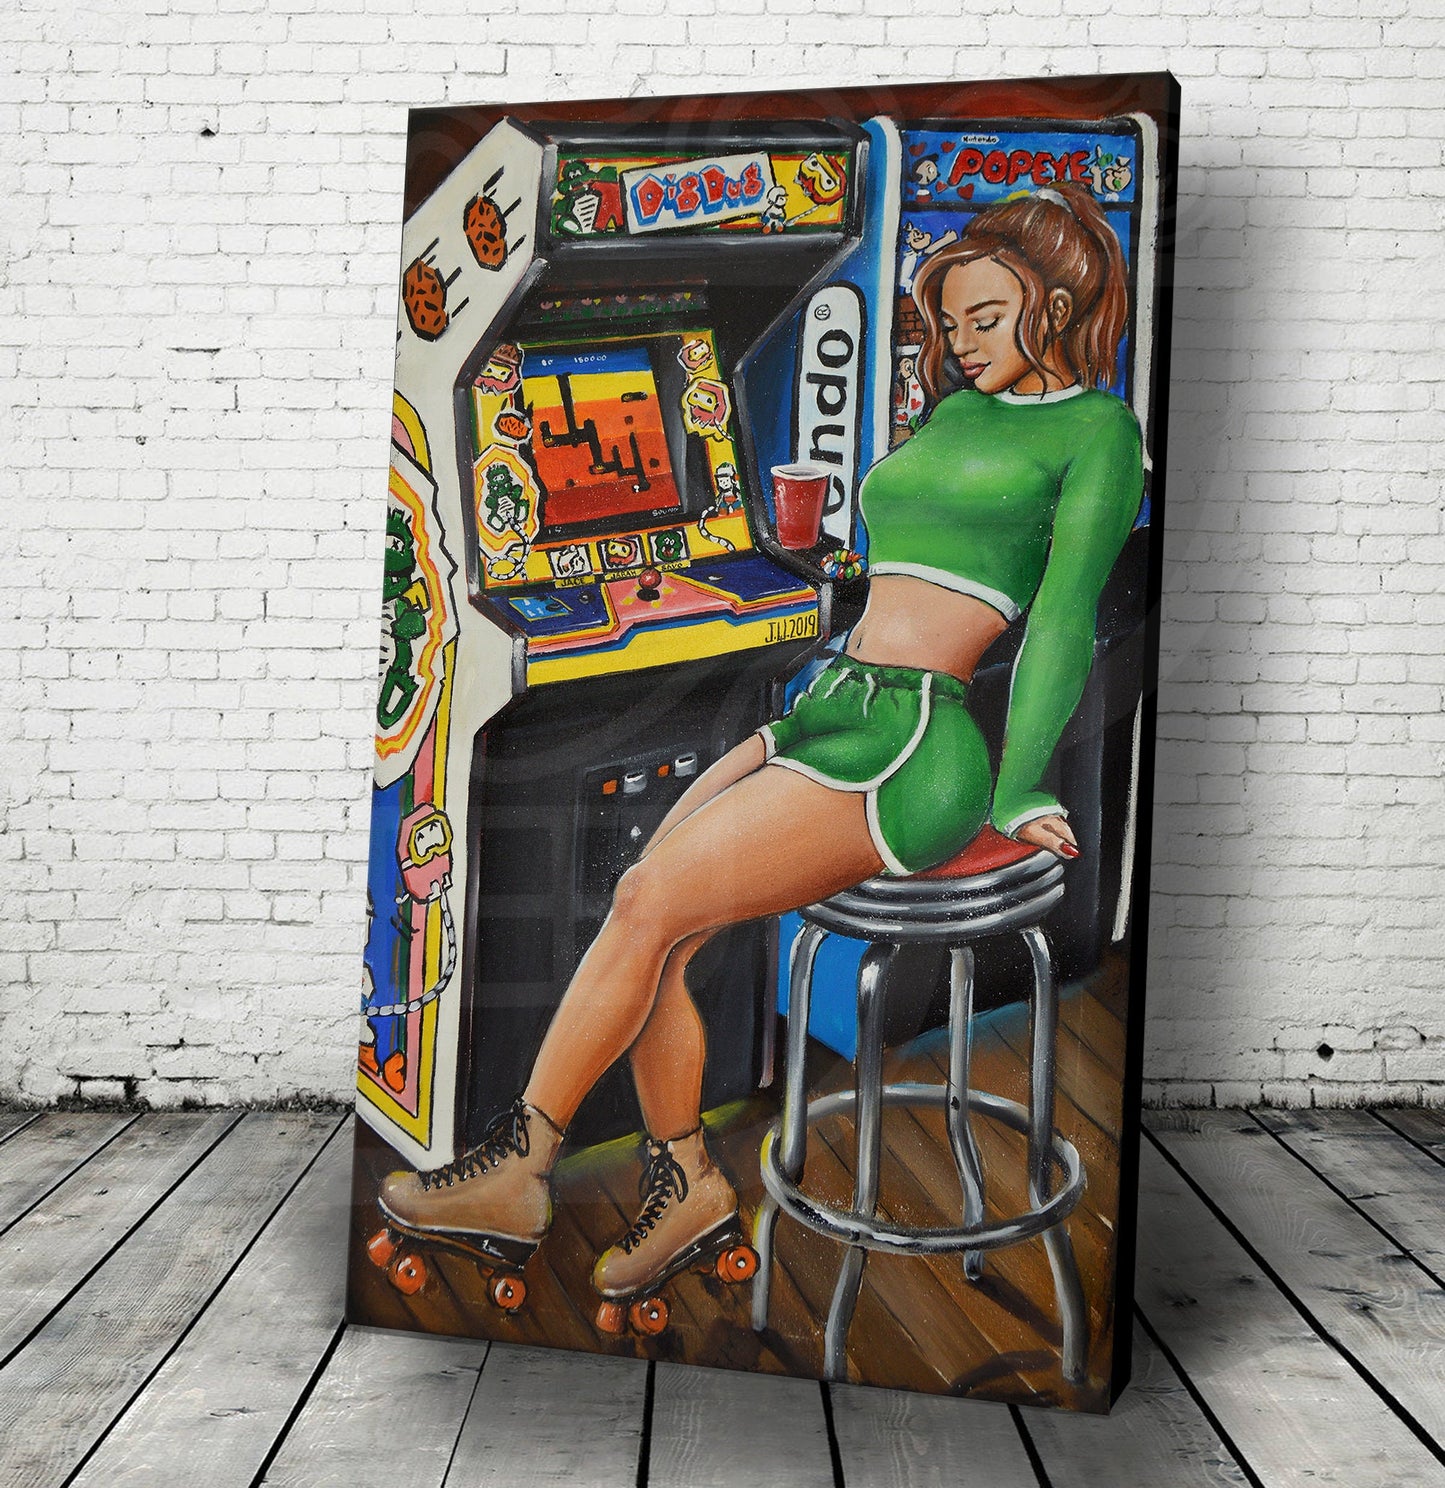 JEREMY WORST DigDug Retro Arcade painting Artwork poster roller skates quad barcade wall art decor sexy joust cabnit stool hentai  anime